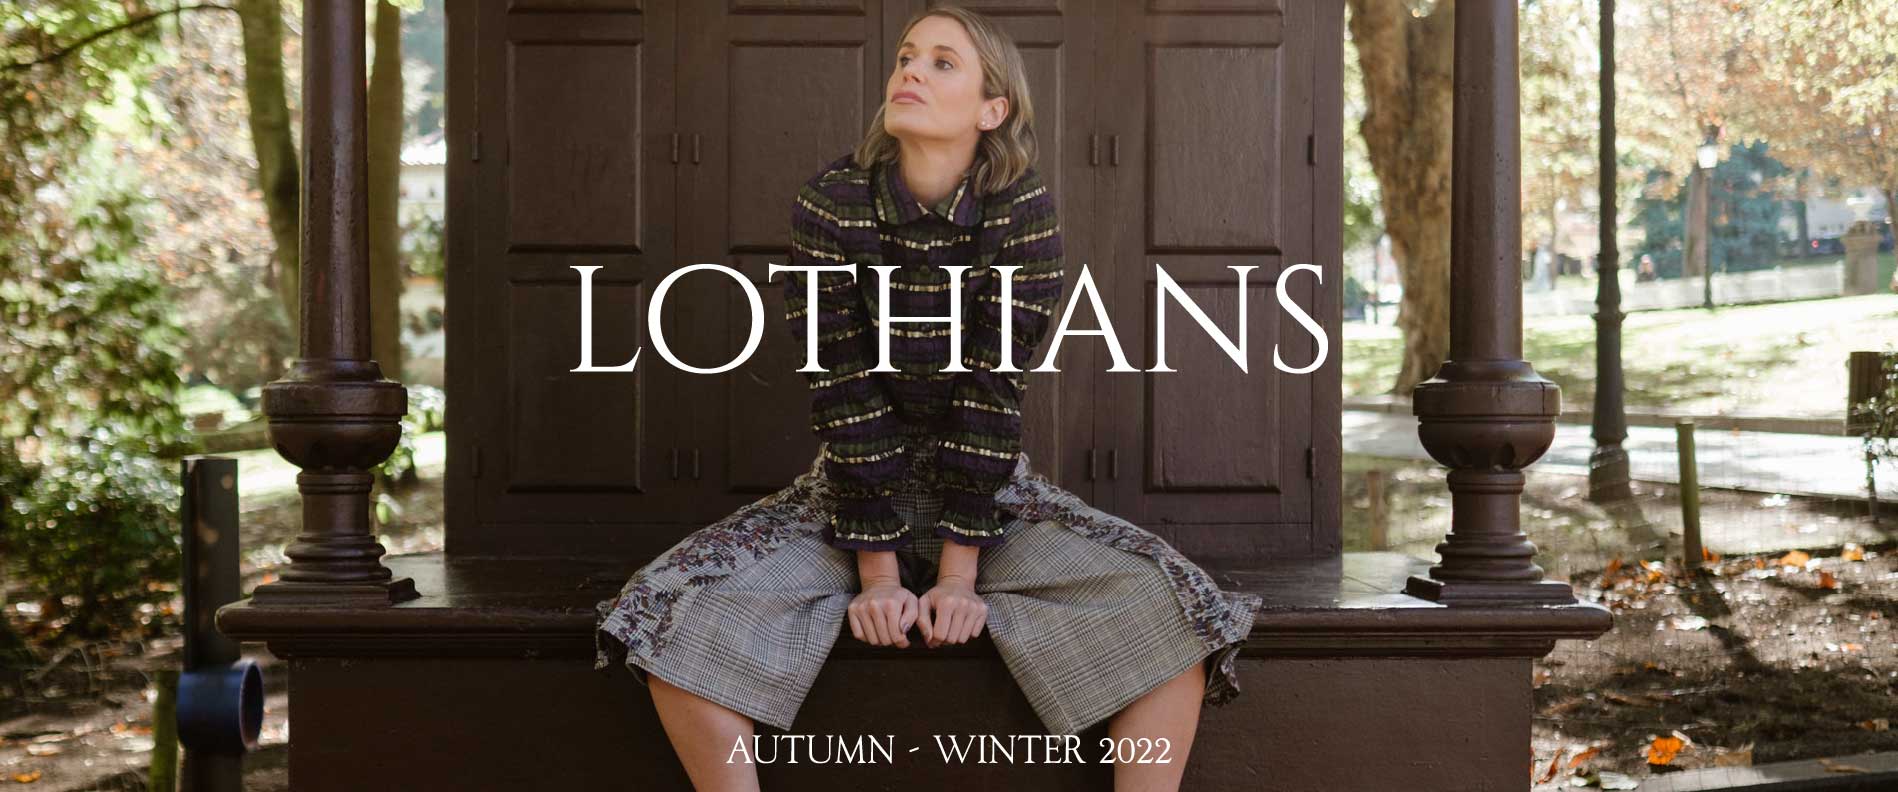 lothians-banner-lothians.jpg